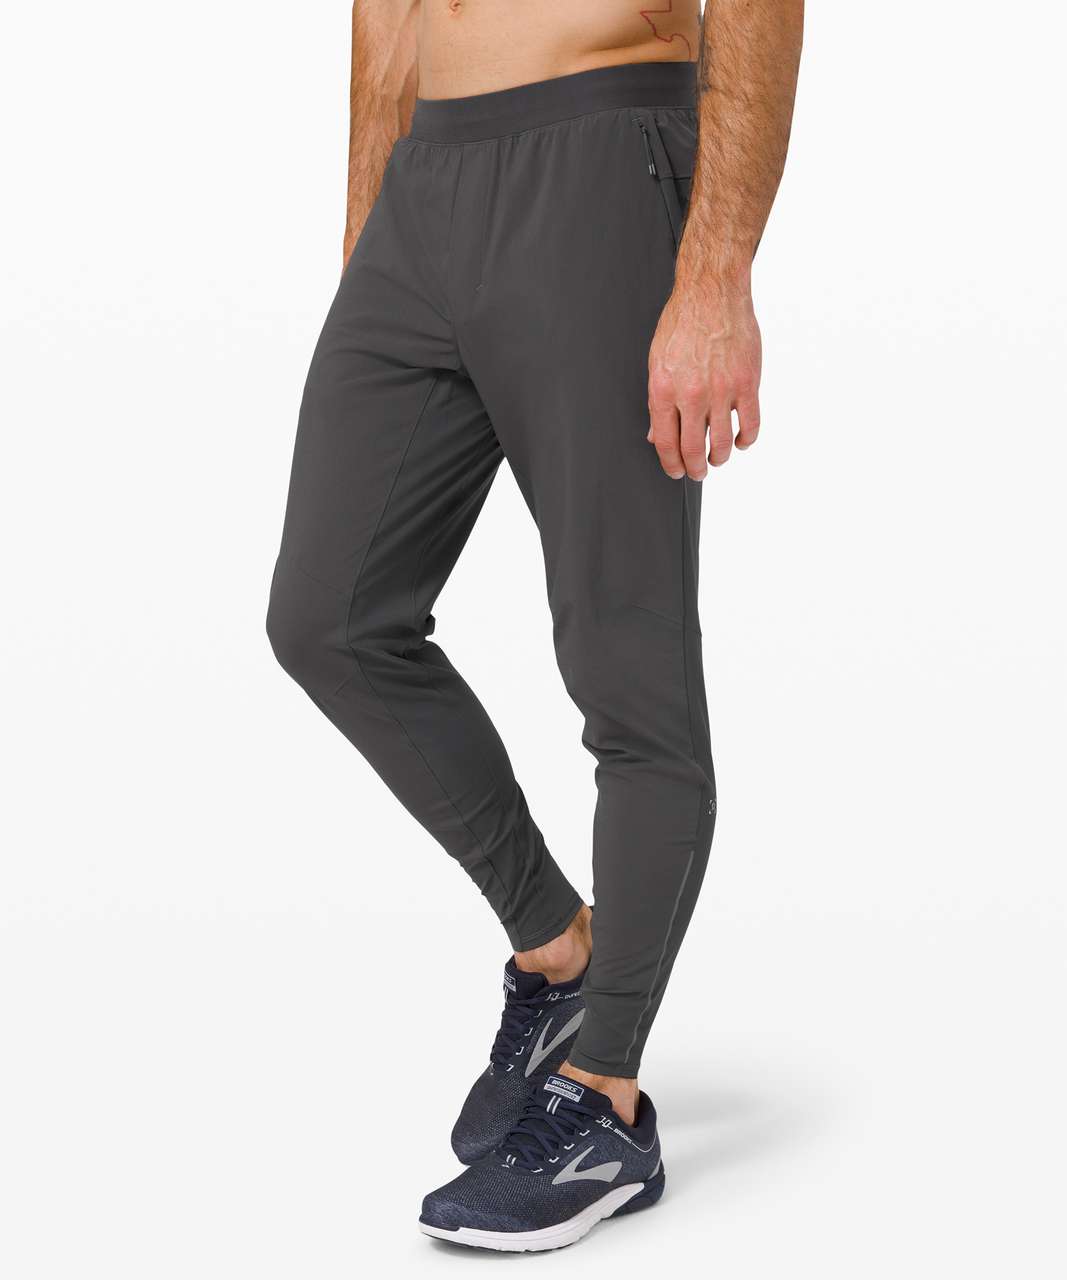 Lululemon Surge Hybrid Pant *Shorter - Graphite Grey